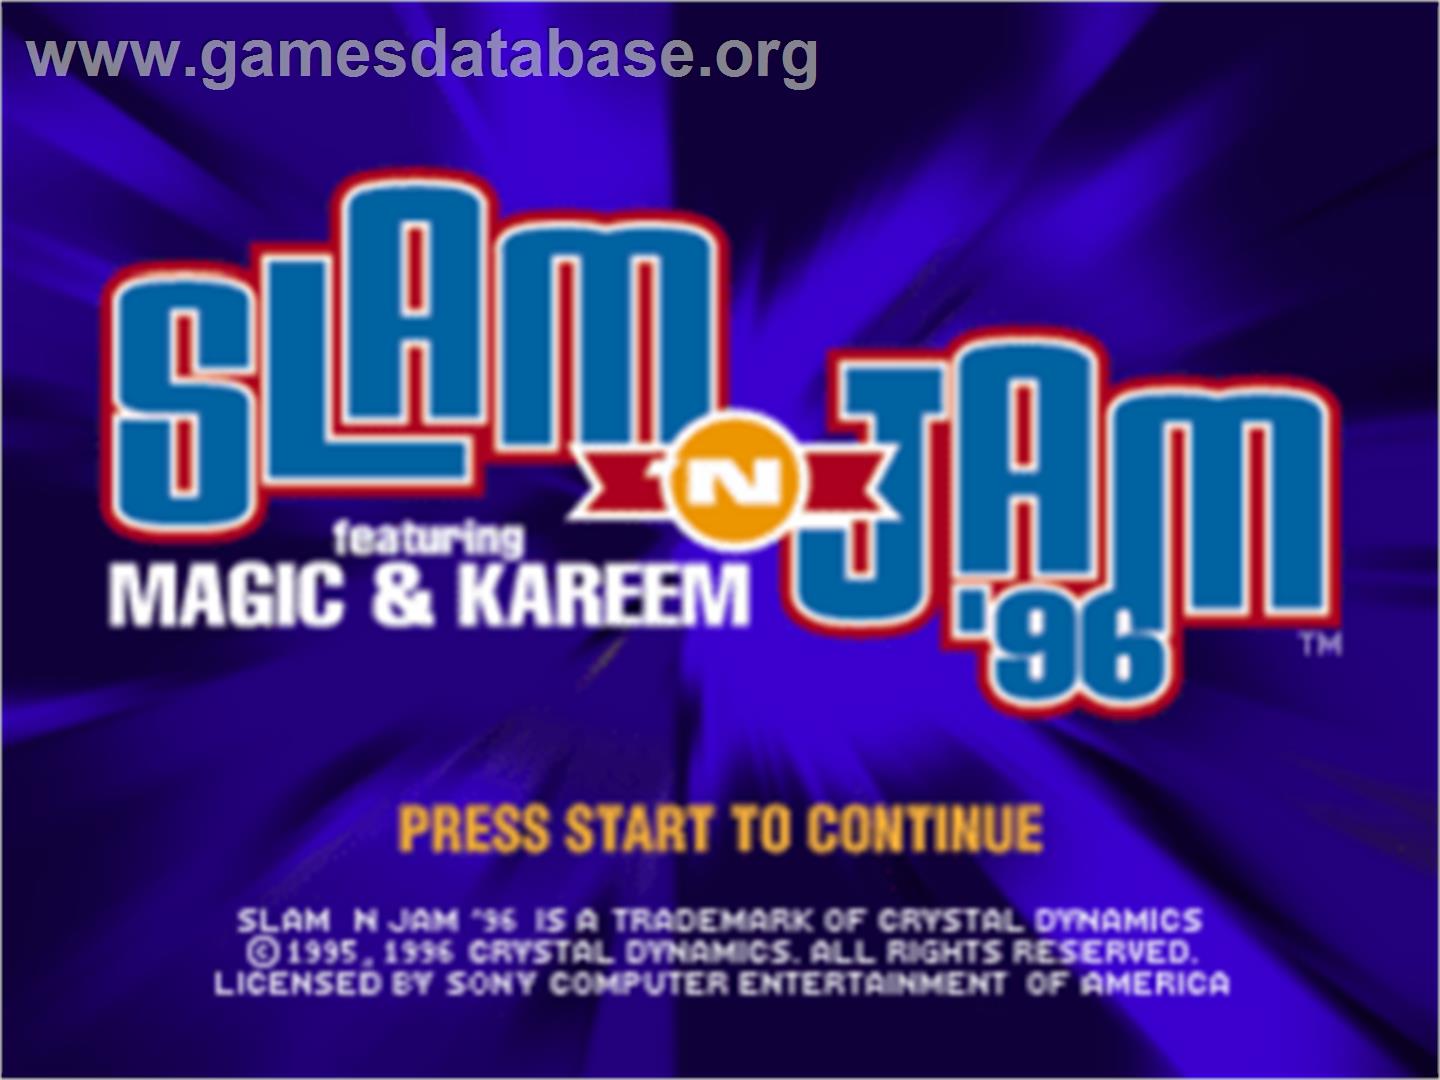 Slam 'N Jam '96 featuring Magic and Kareem - Sony Playstation - Artwork - Title Screen